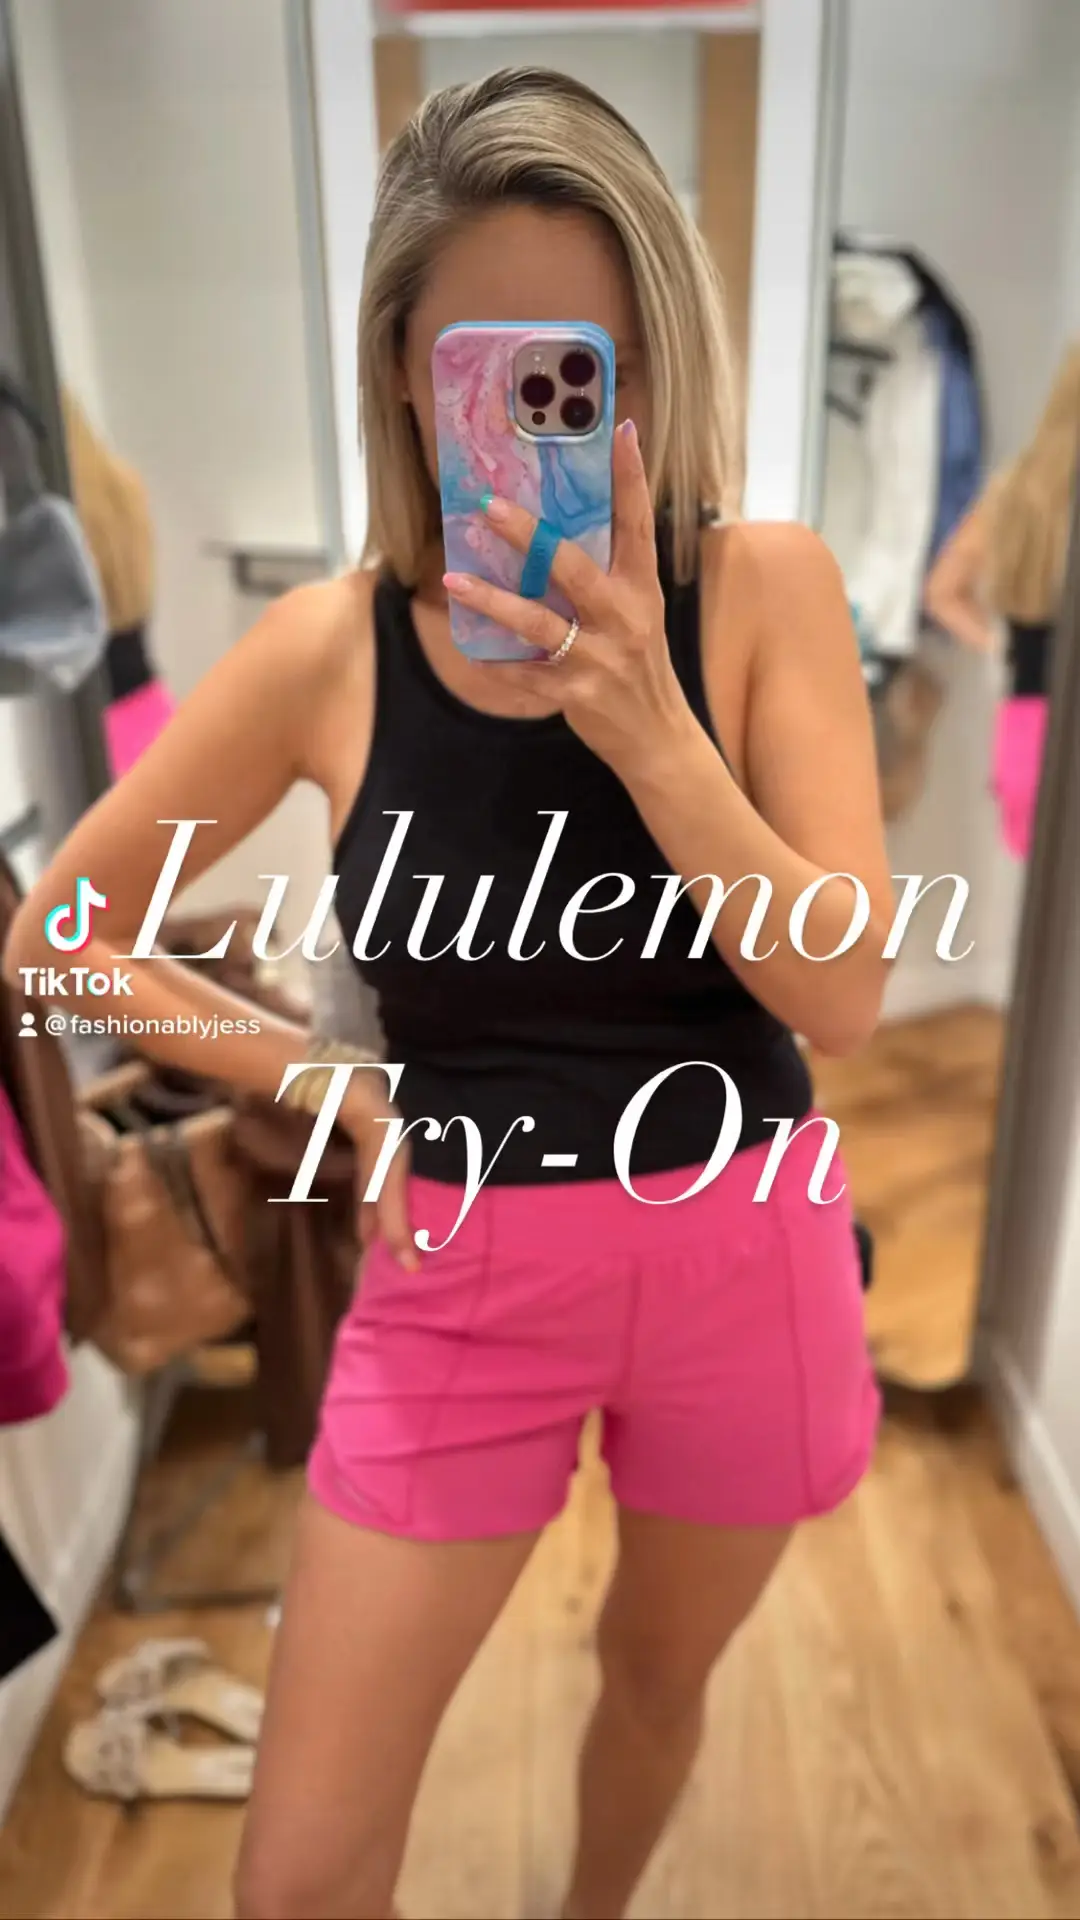 Lululemon New In, Video published by Fashionablyjess